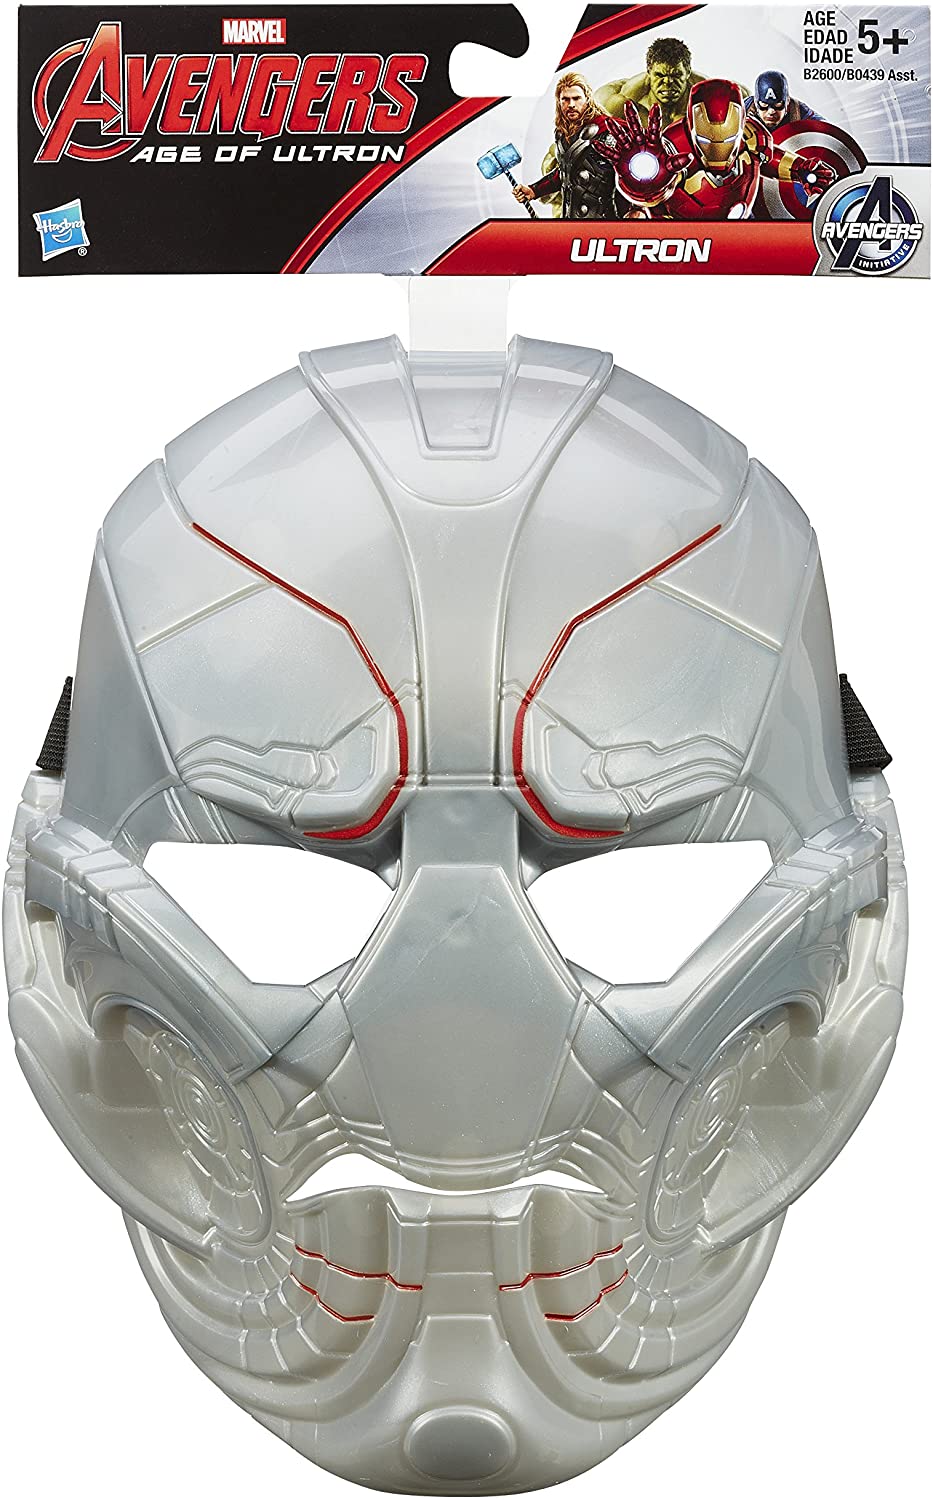 Marvel Avengers Age of Ultron Ultron Mask